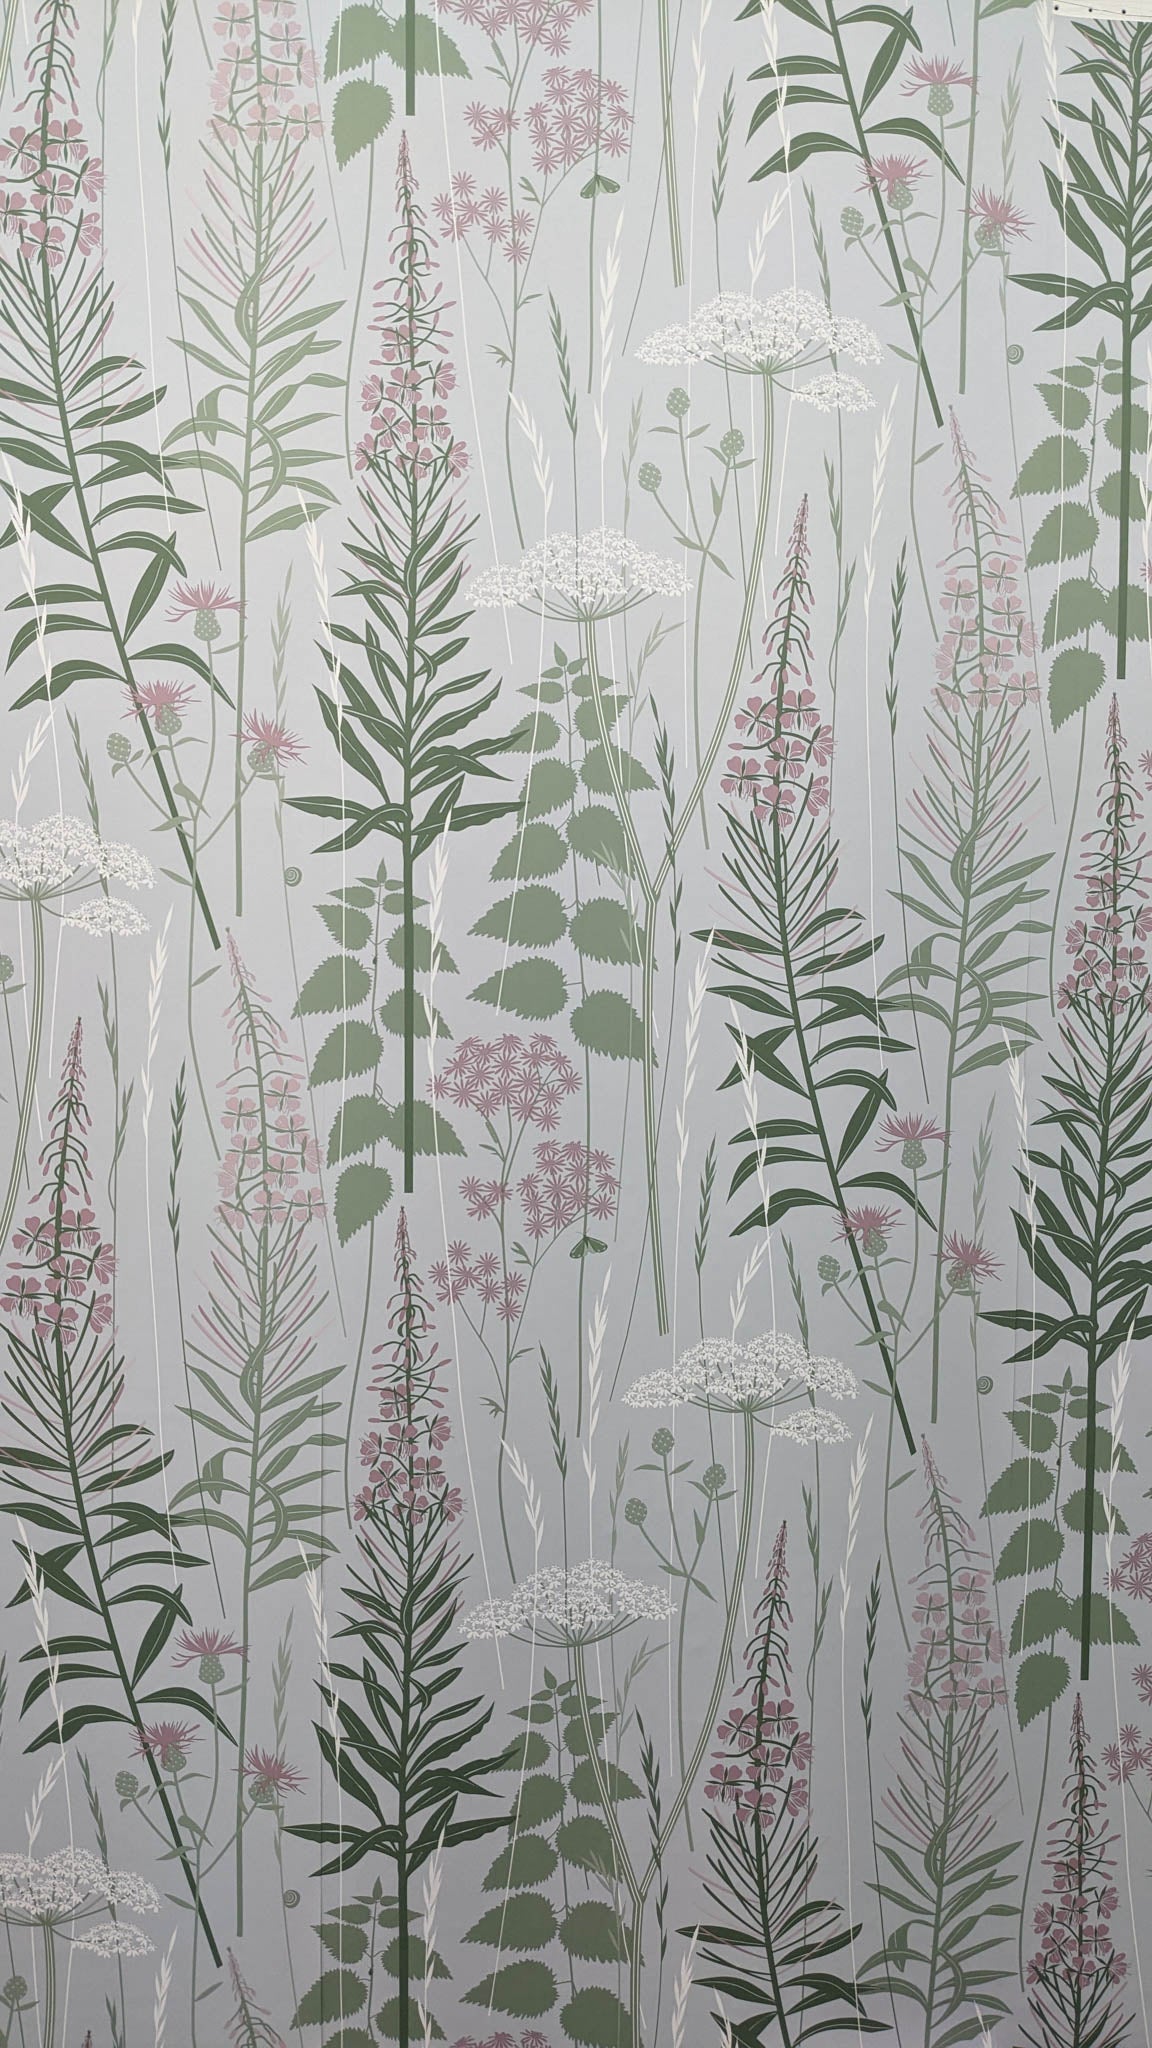 Wild Edge wallpaper in full bloom, pink andgreen colourway